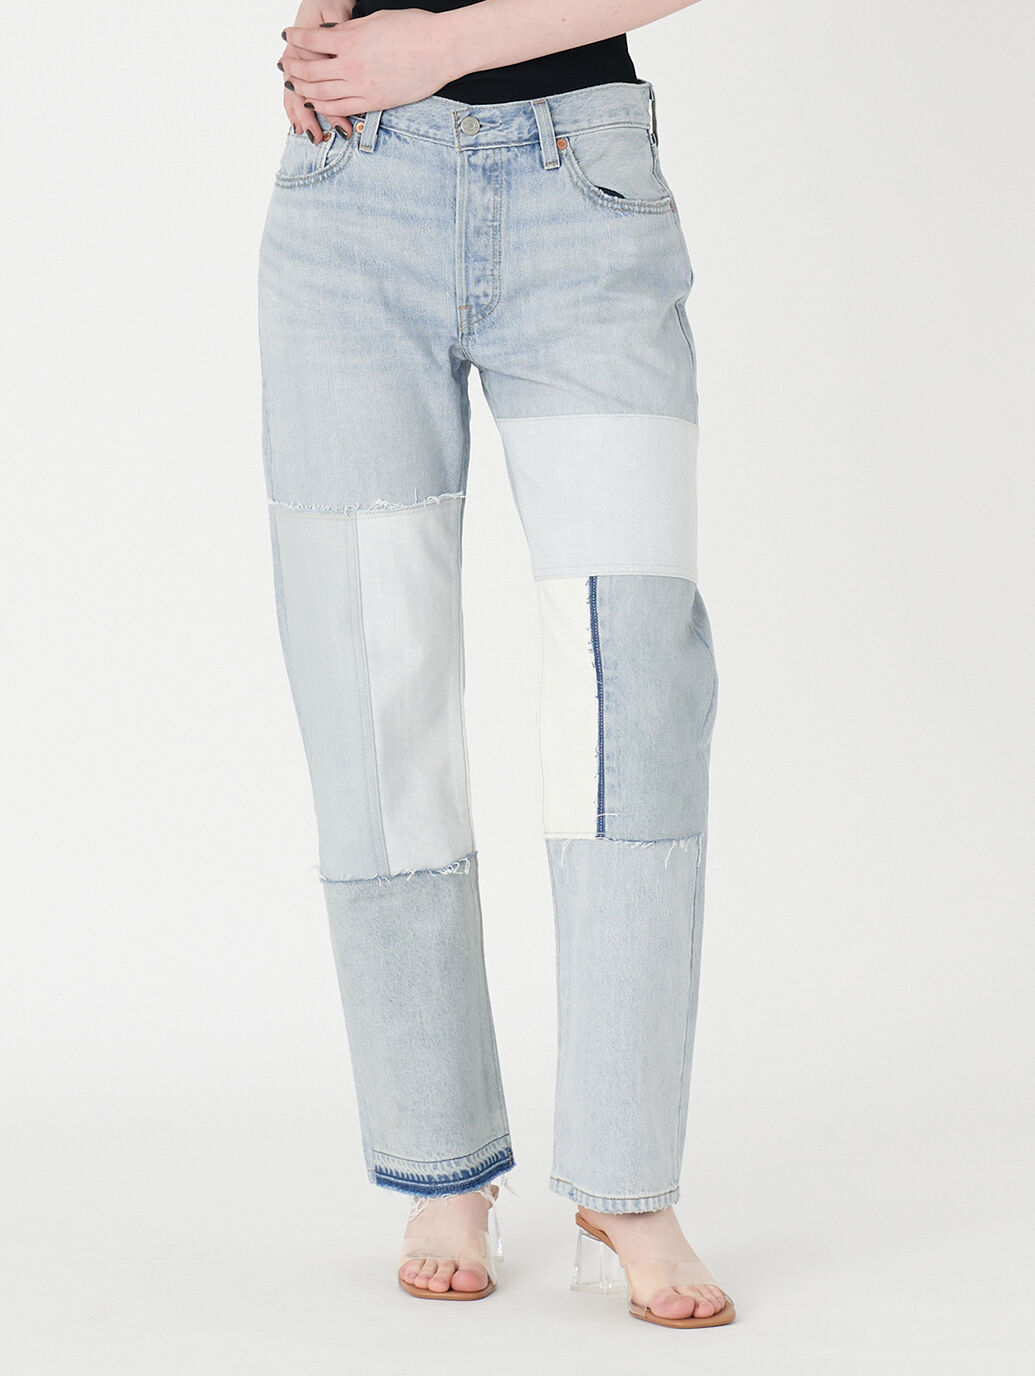 NewJeans（ニュージーンズ）501®ジーンズカスタマイズ 着用アイテム